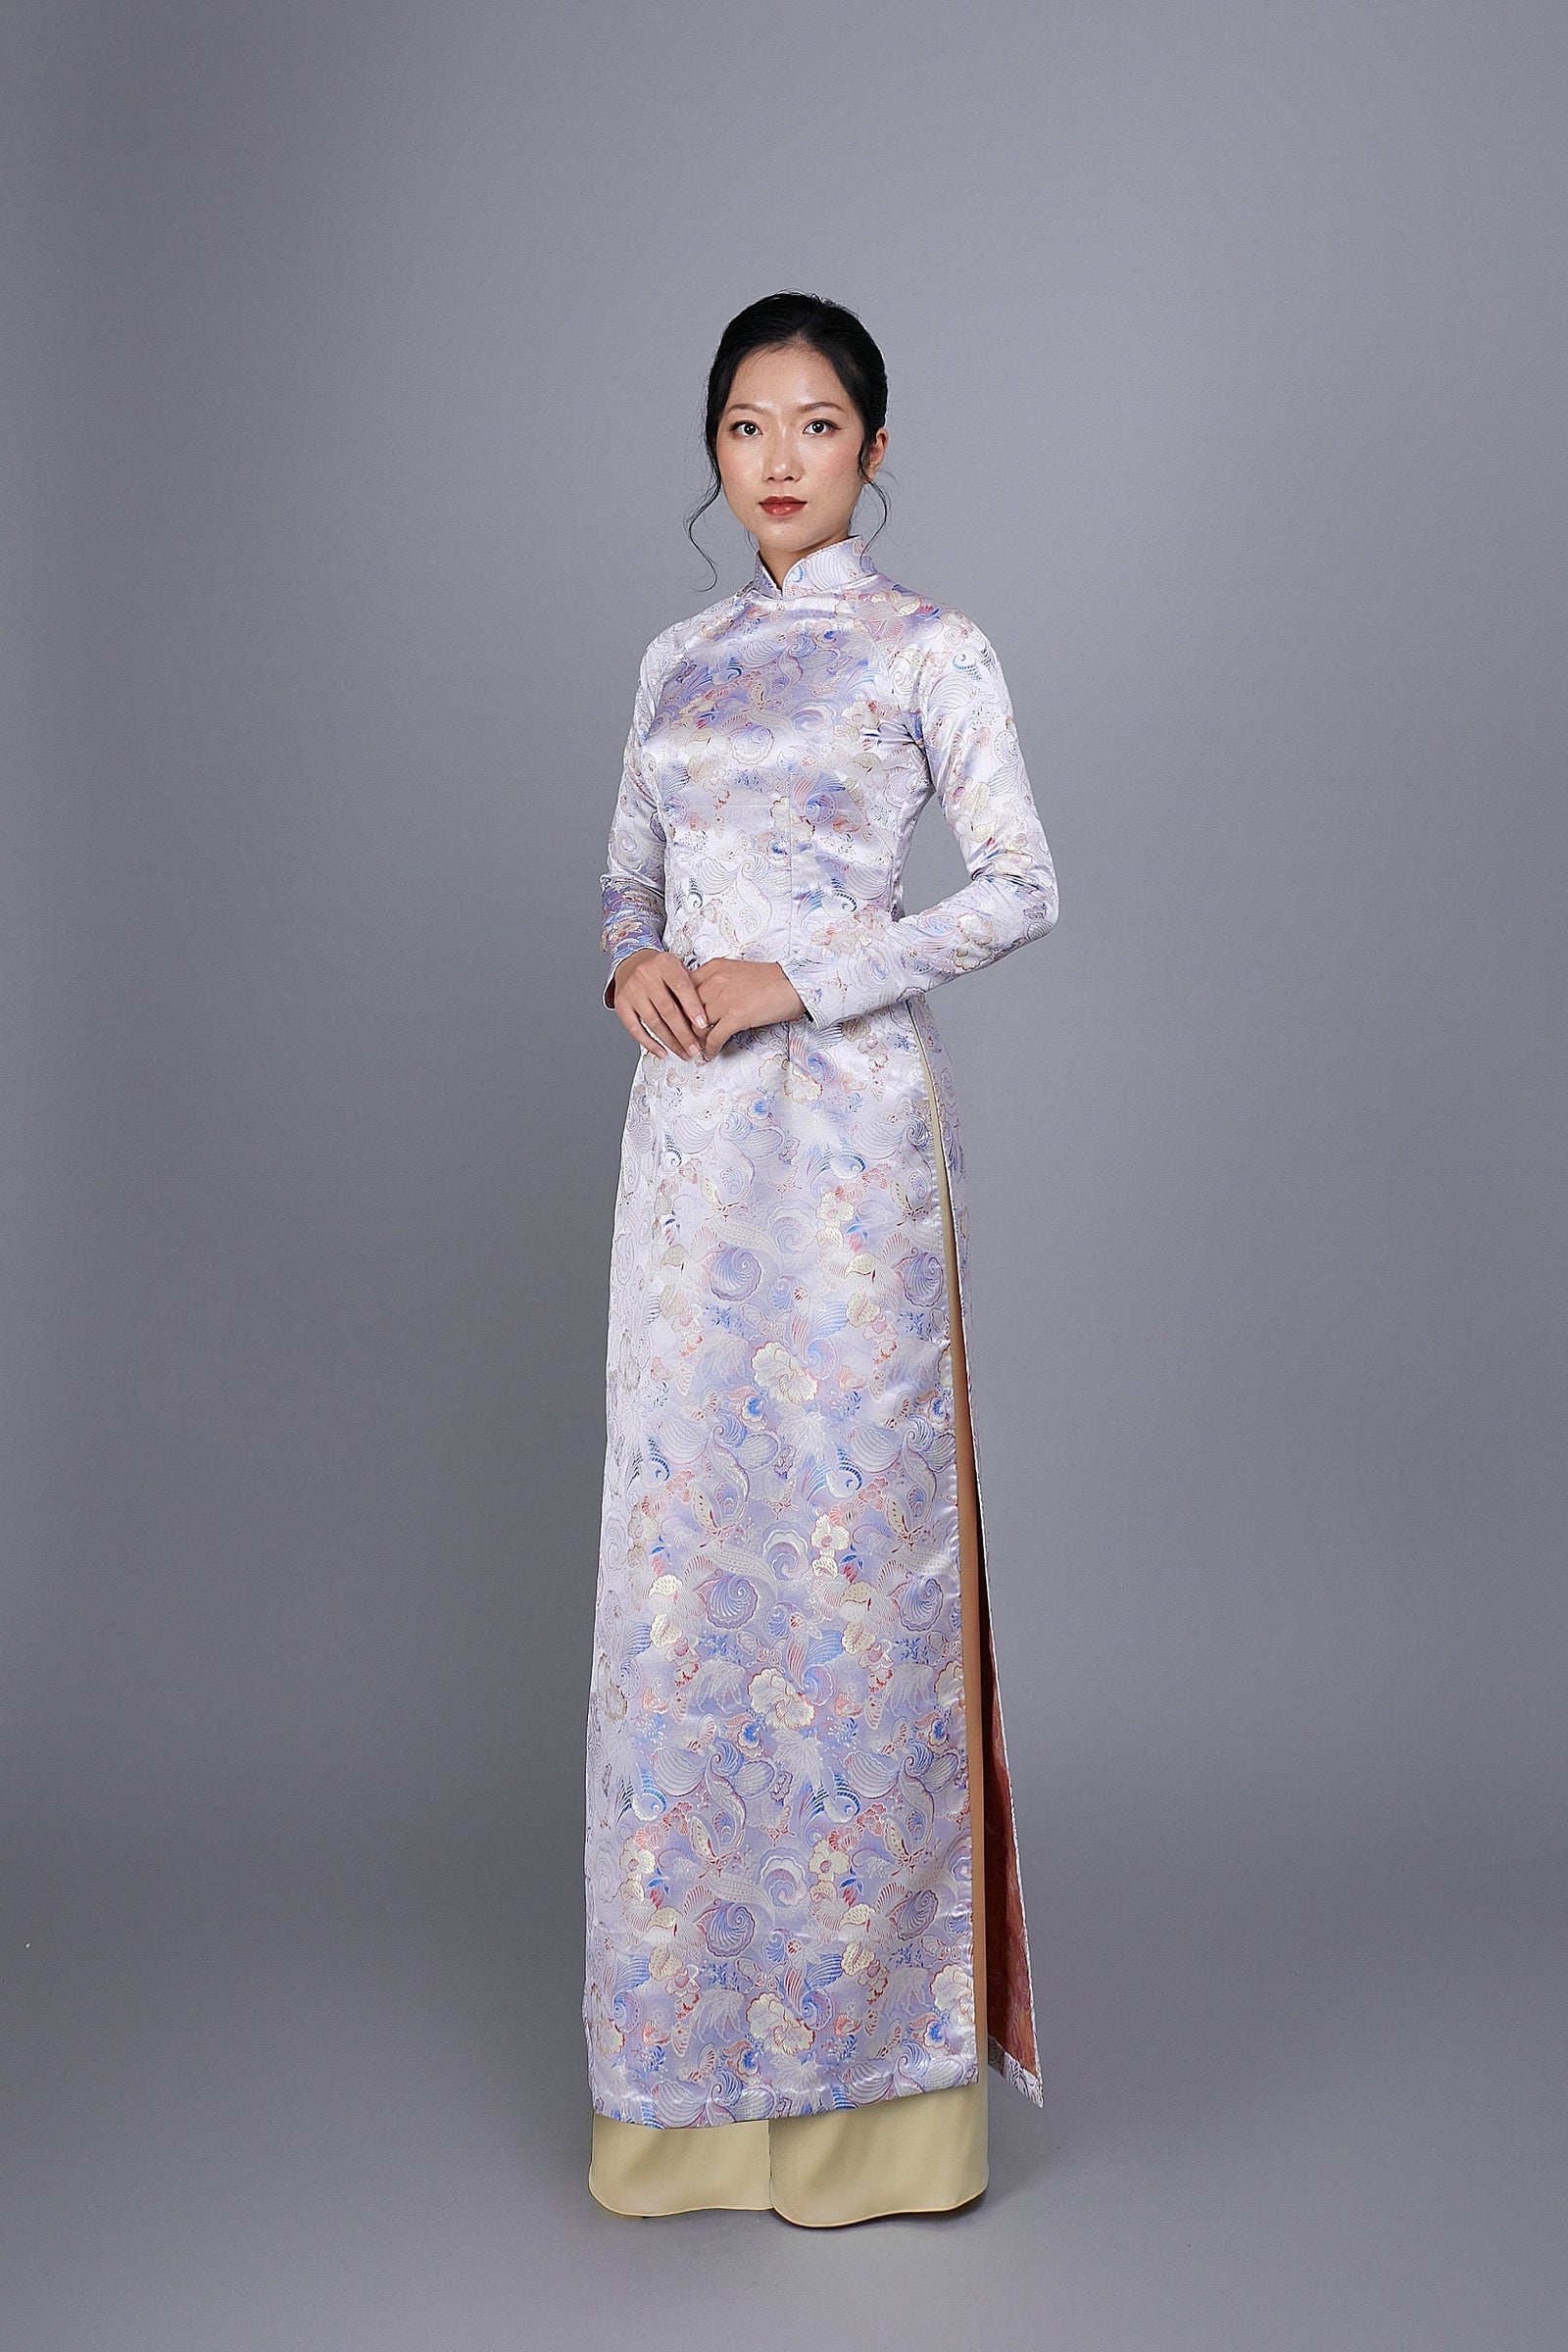 Vietnamese woman with Ao Dai dress – Stock Editorial Photo © kobbydagan  #170918350